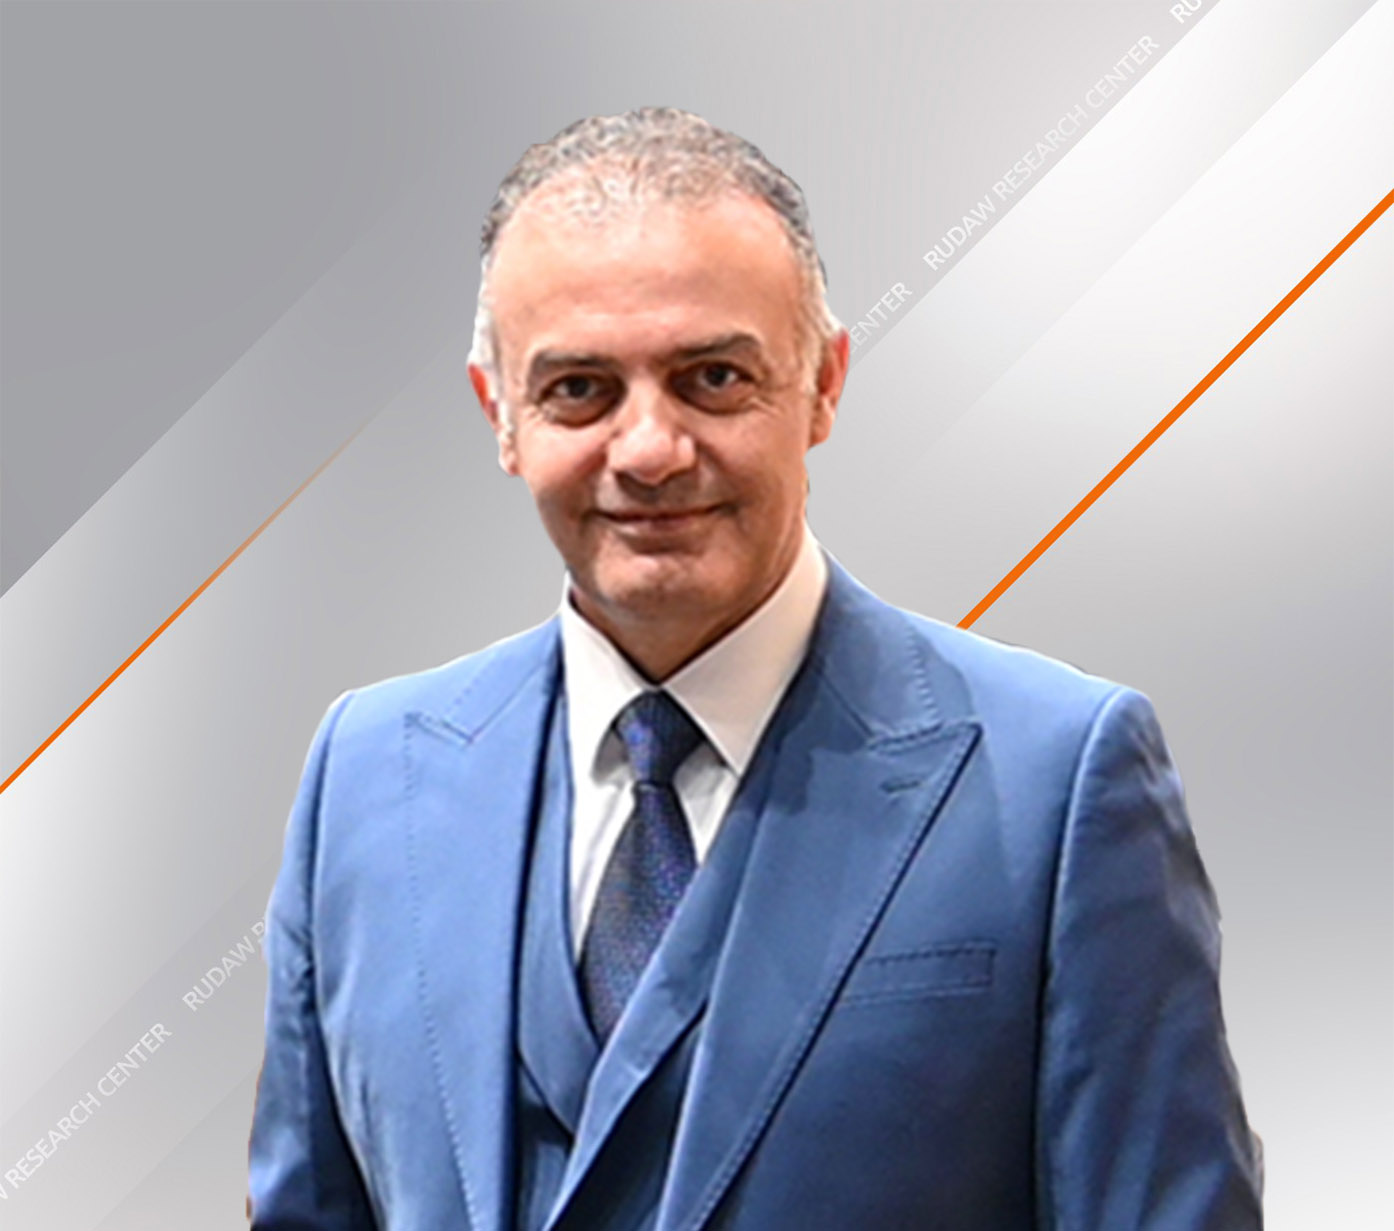 Dr. Adel Bakawan